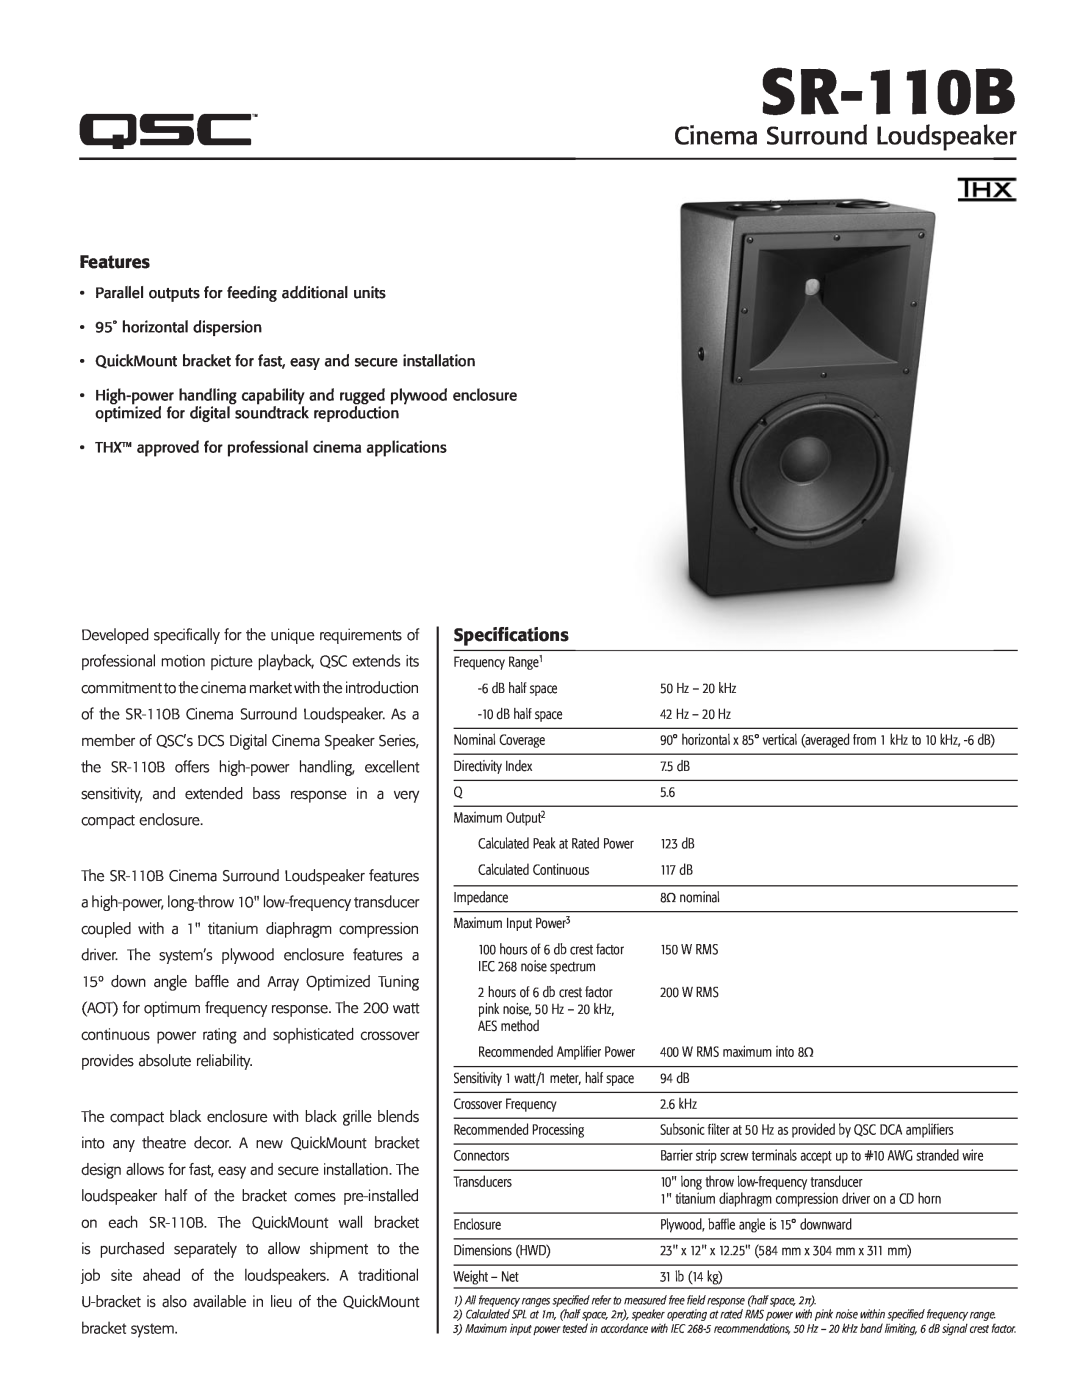 QSC Audio SR-110B specifications Features, Specifications, Cinema Surround Loudspeaker 